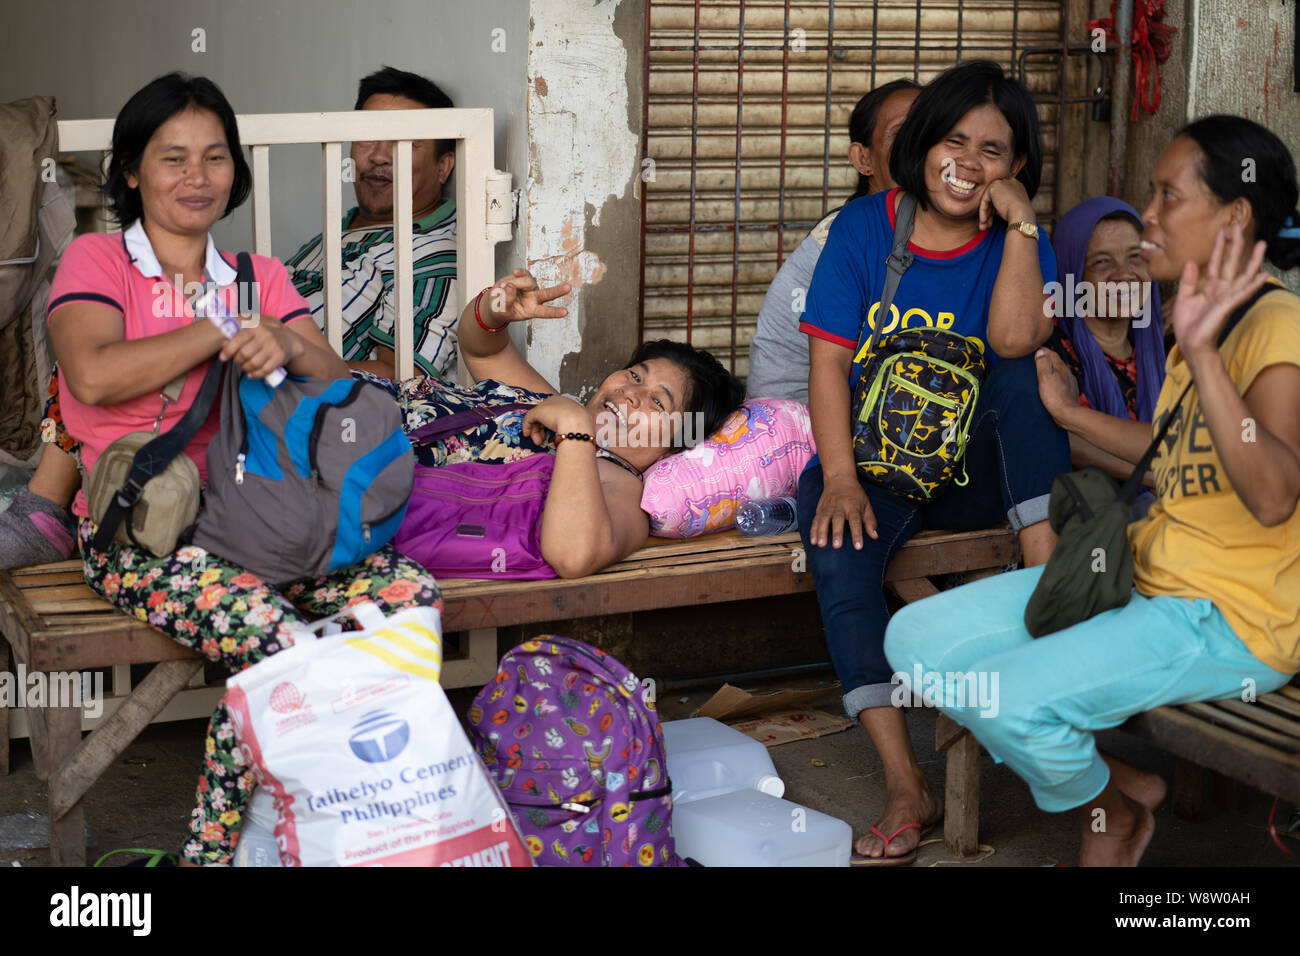 A group of Filipino women smiling towards the camera within a market area,Cebu City,Philippines, Stock Photo